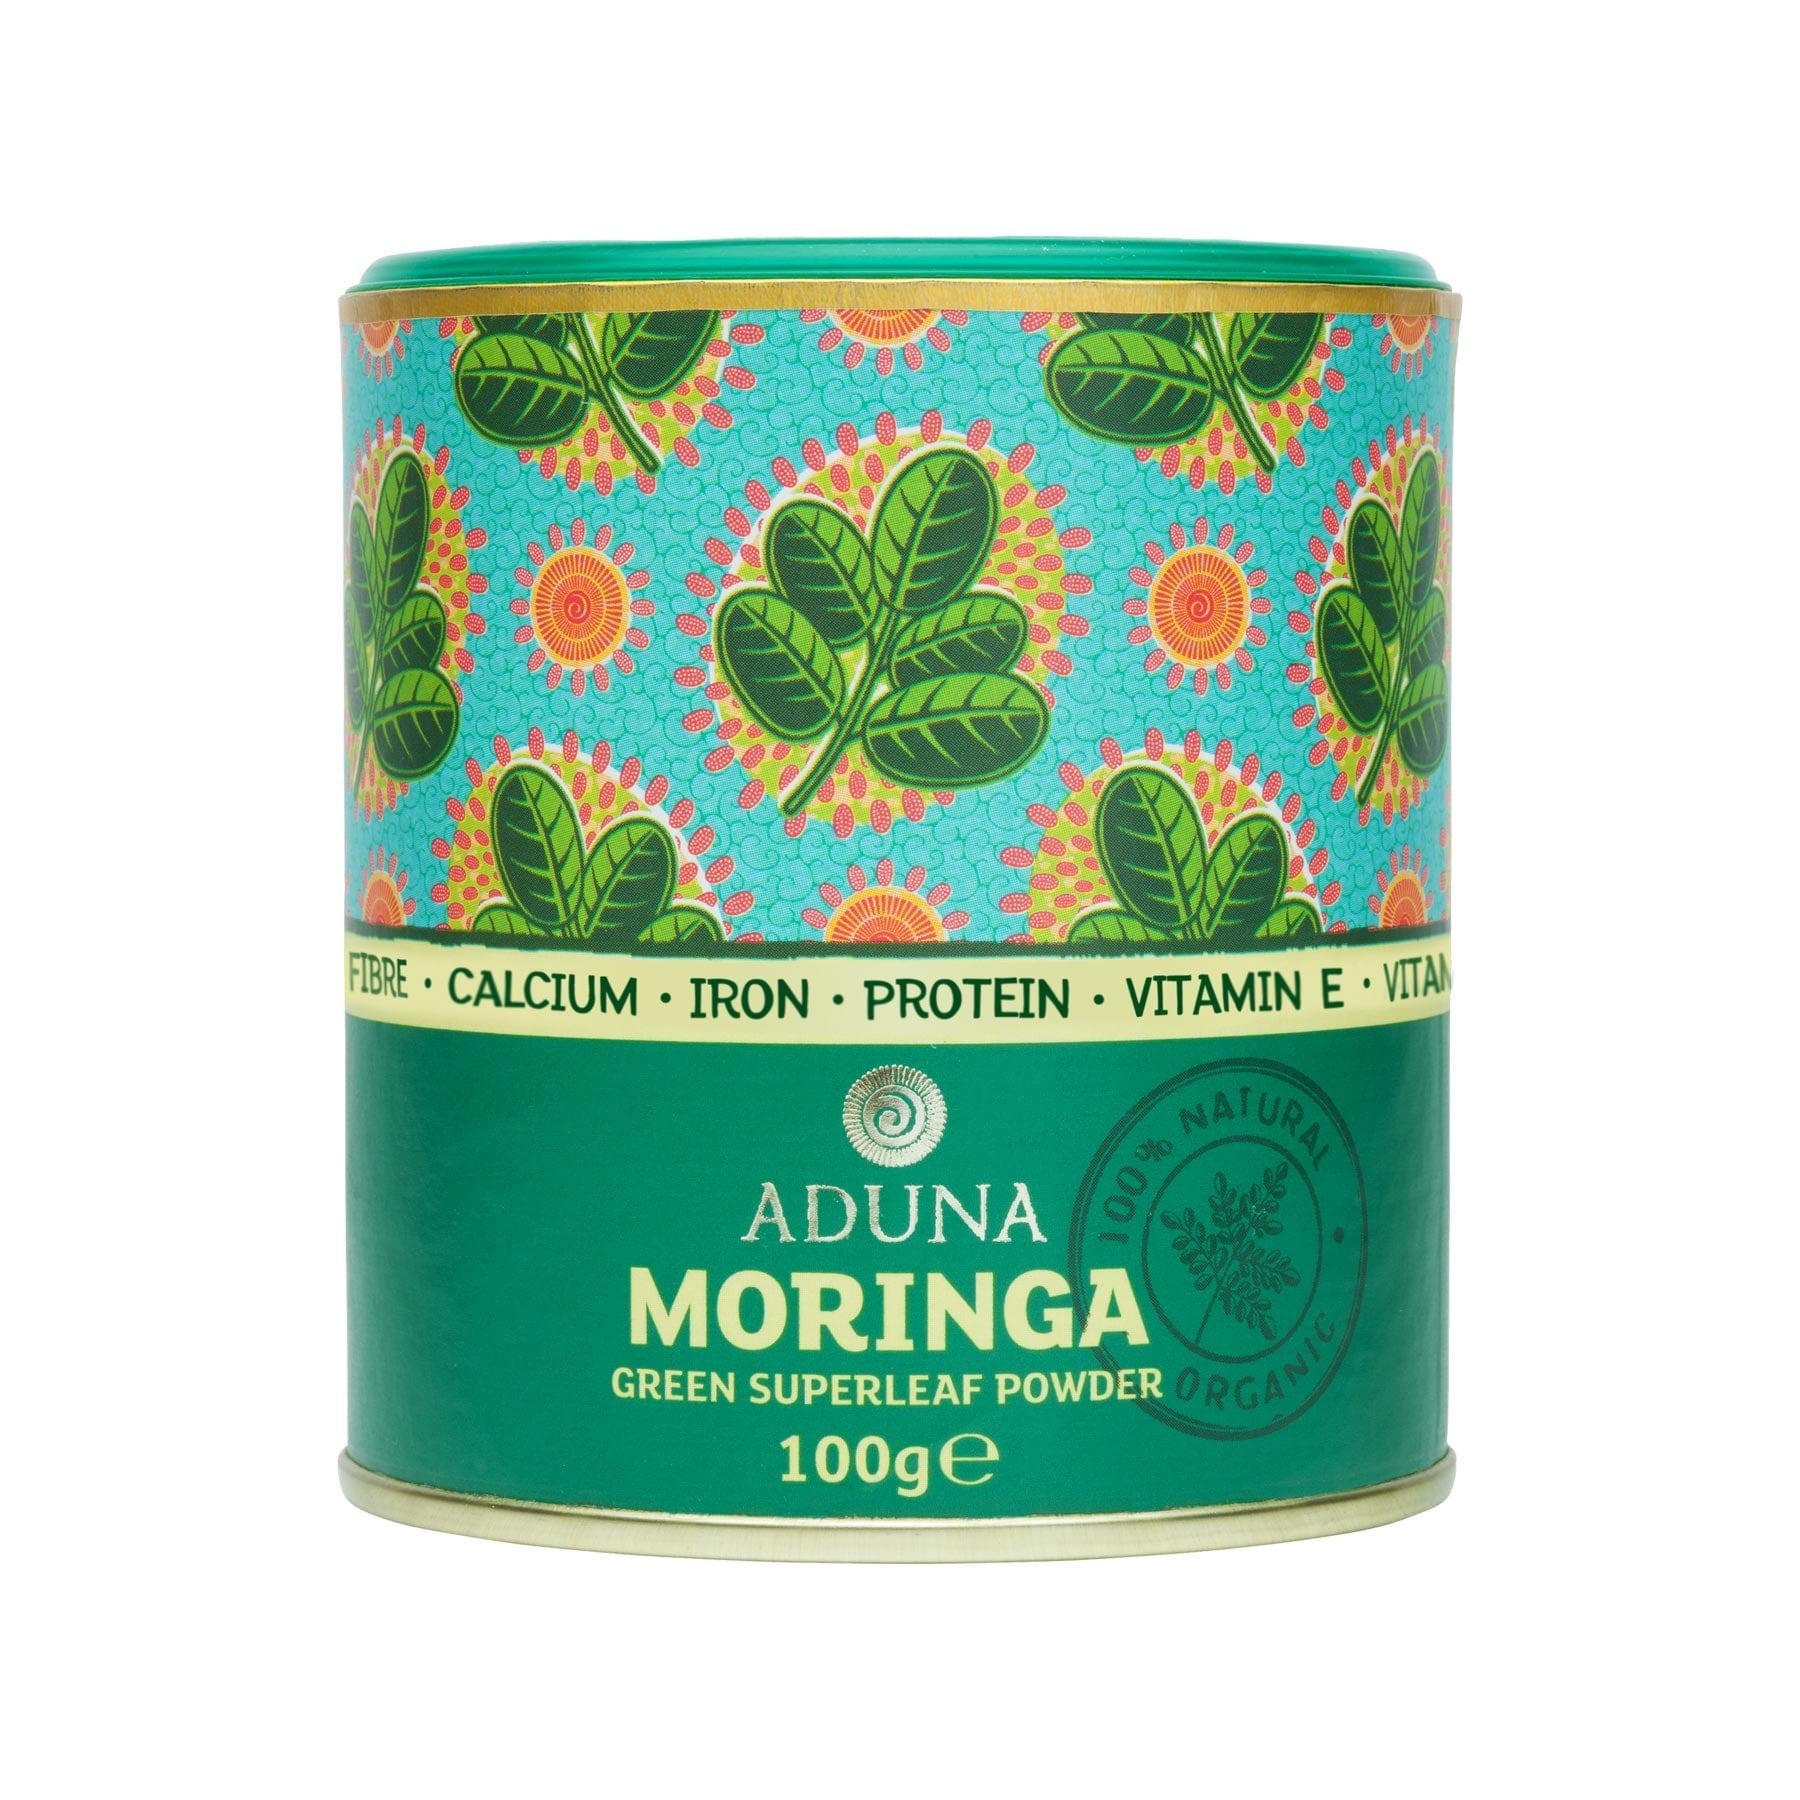 Moringa green superleaf powder 100g